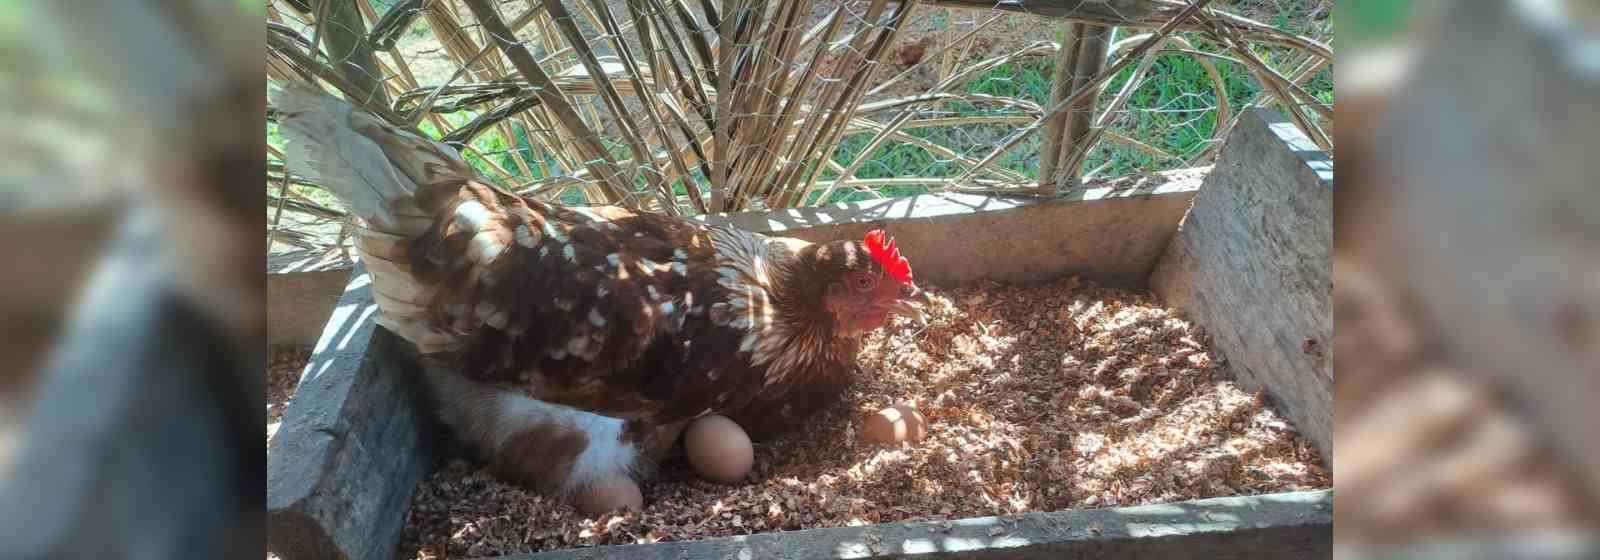  Familia productora de huevos en El Castillo, aspira a ser proveedora de la comunidad